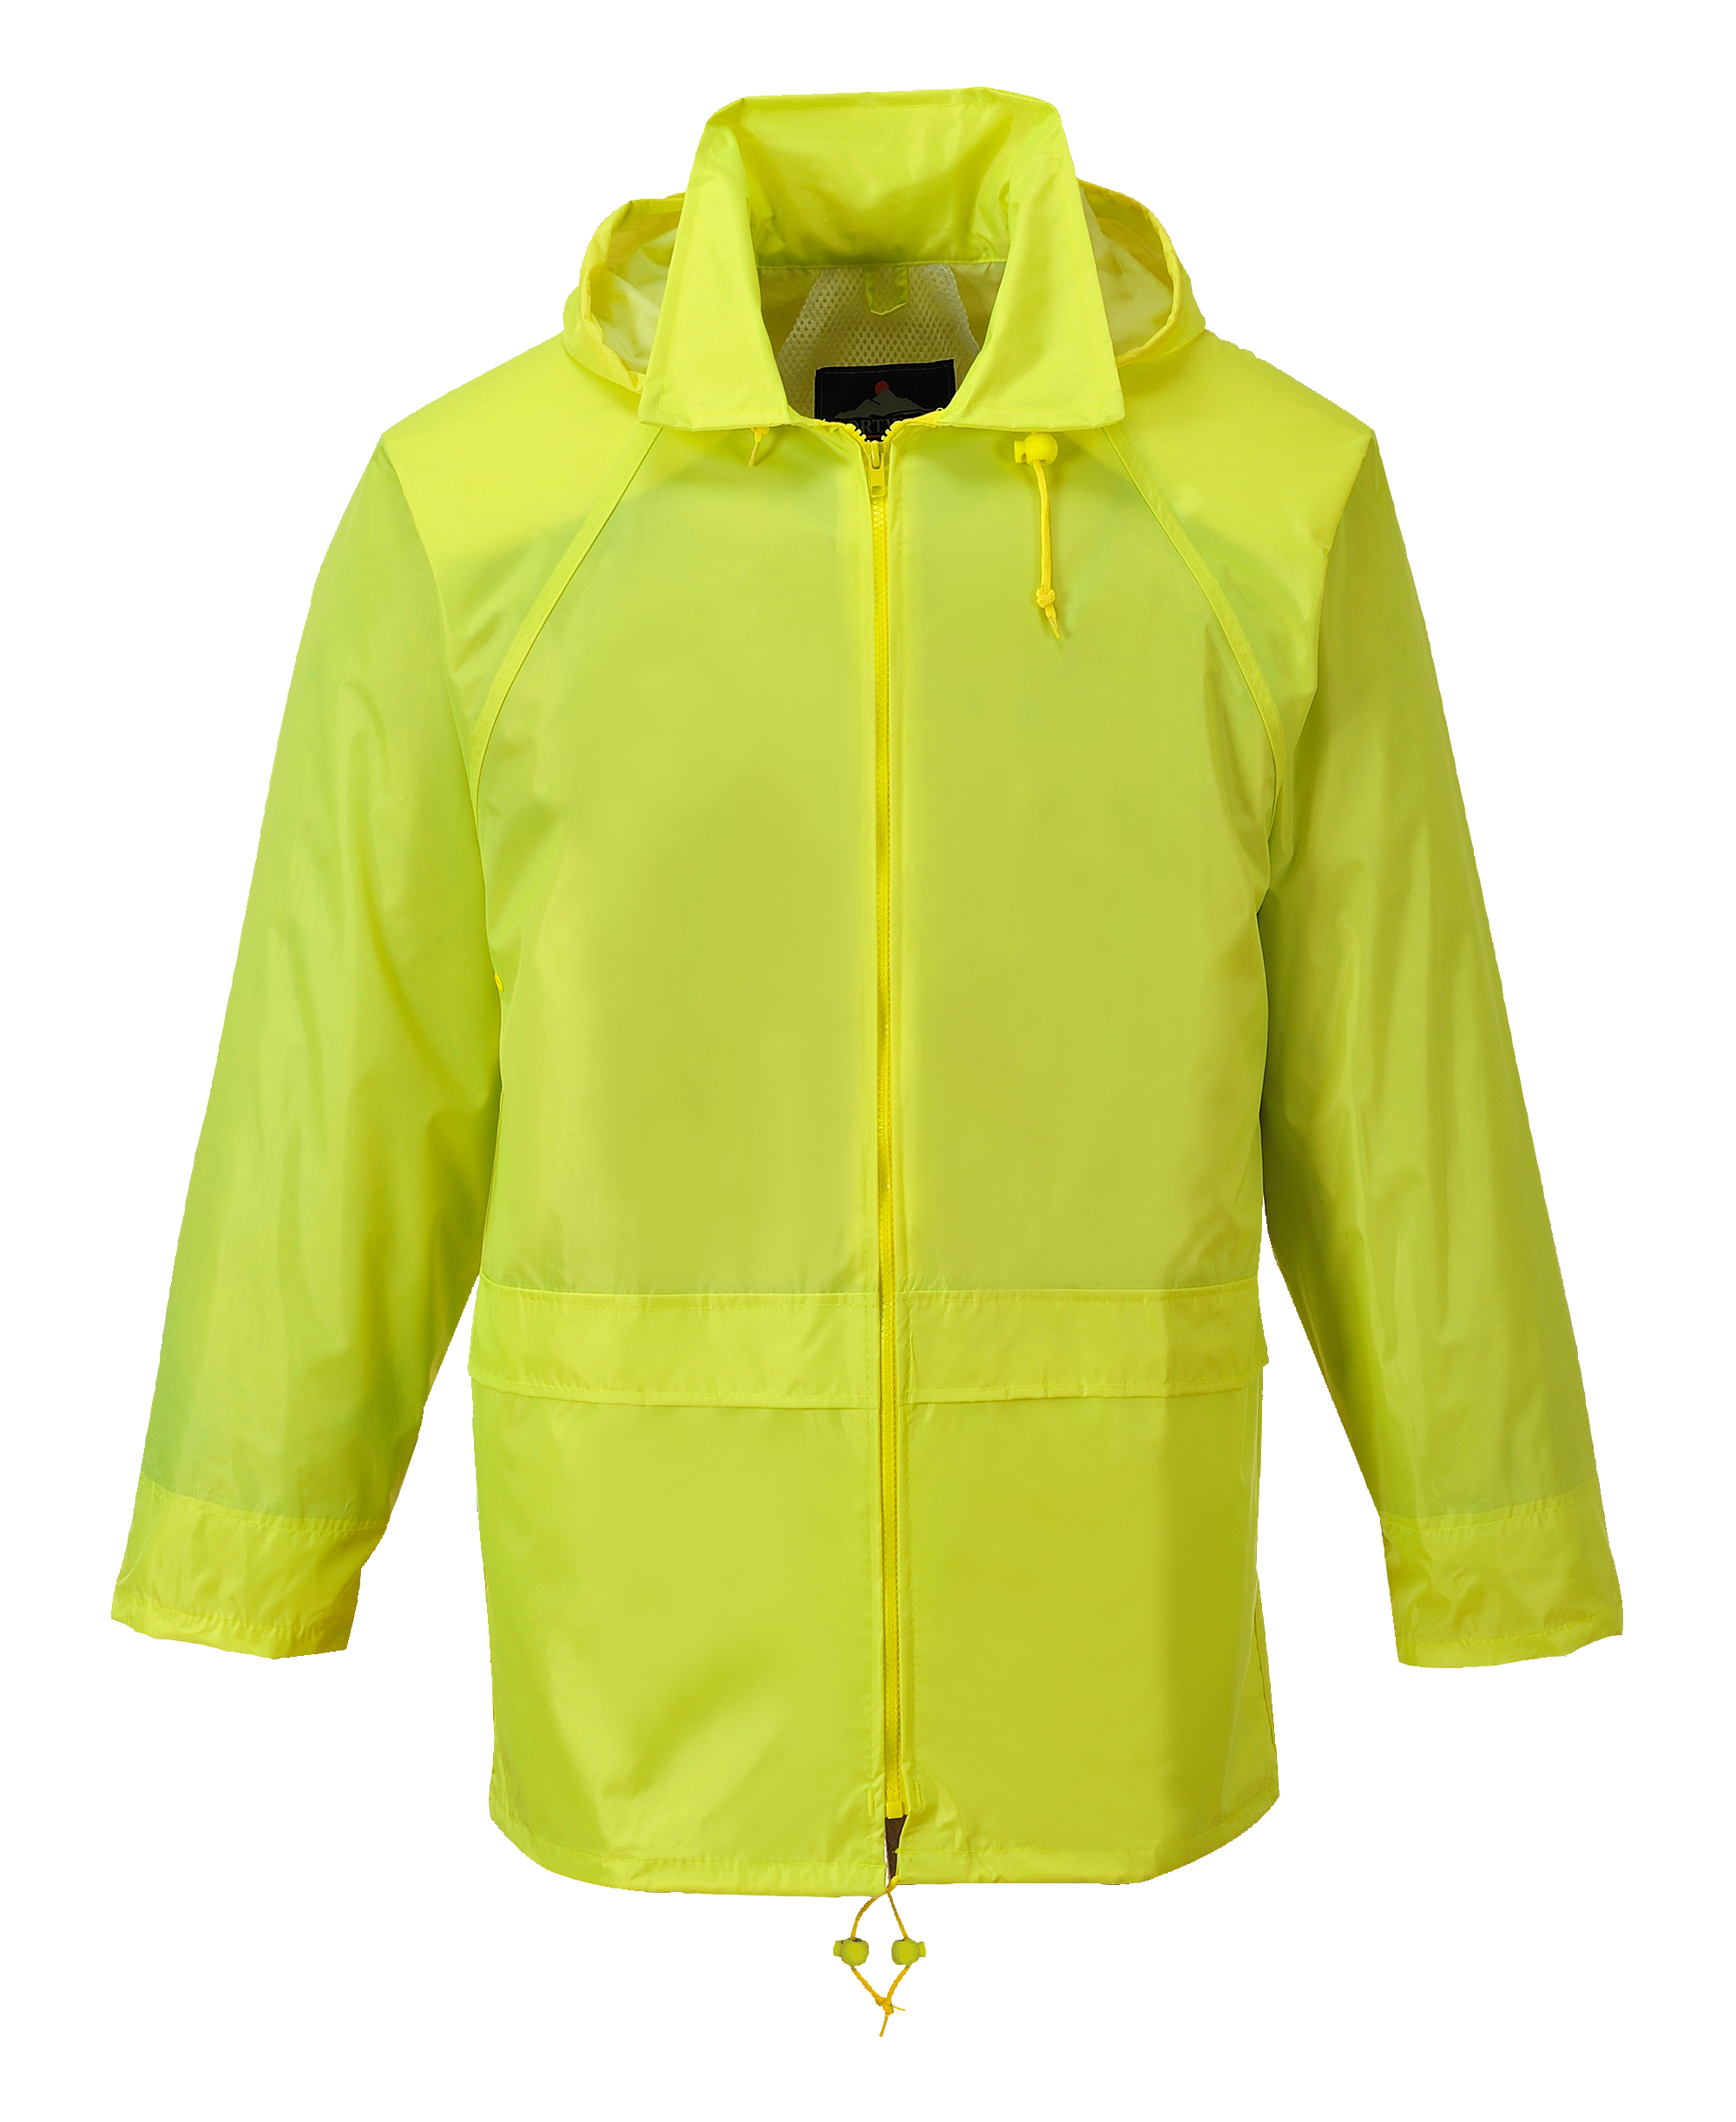 ax-portwest-classic-rain-jacket-yellow_8ahcxumo4wyl8eka.jpeg